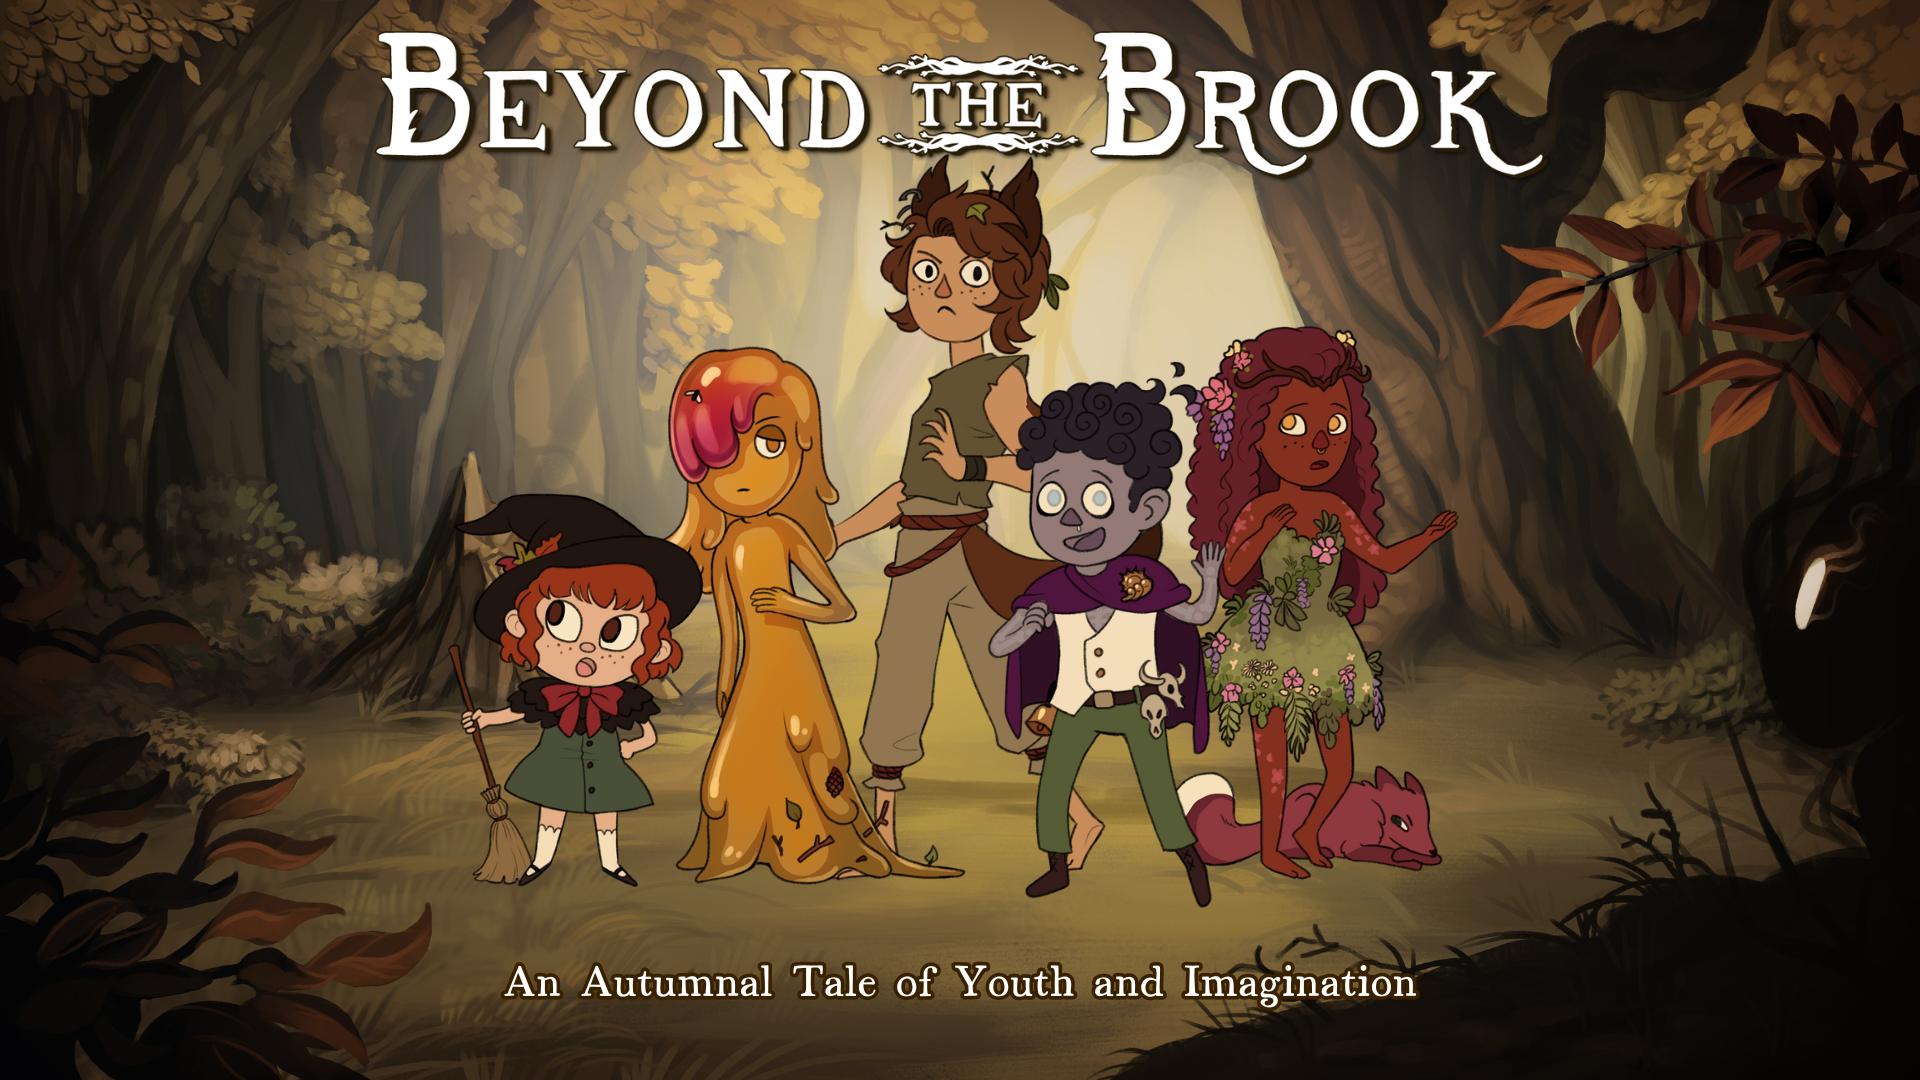 Beyond the Brook